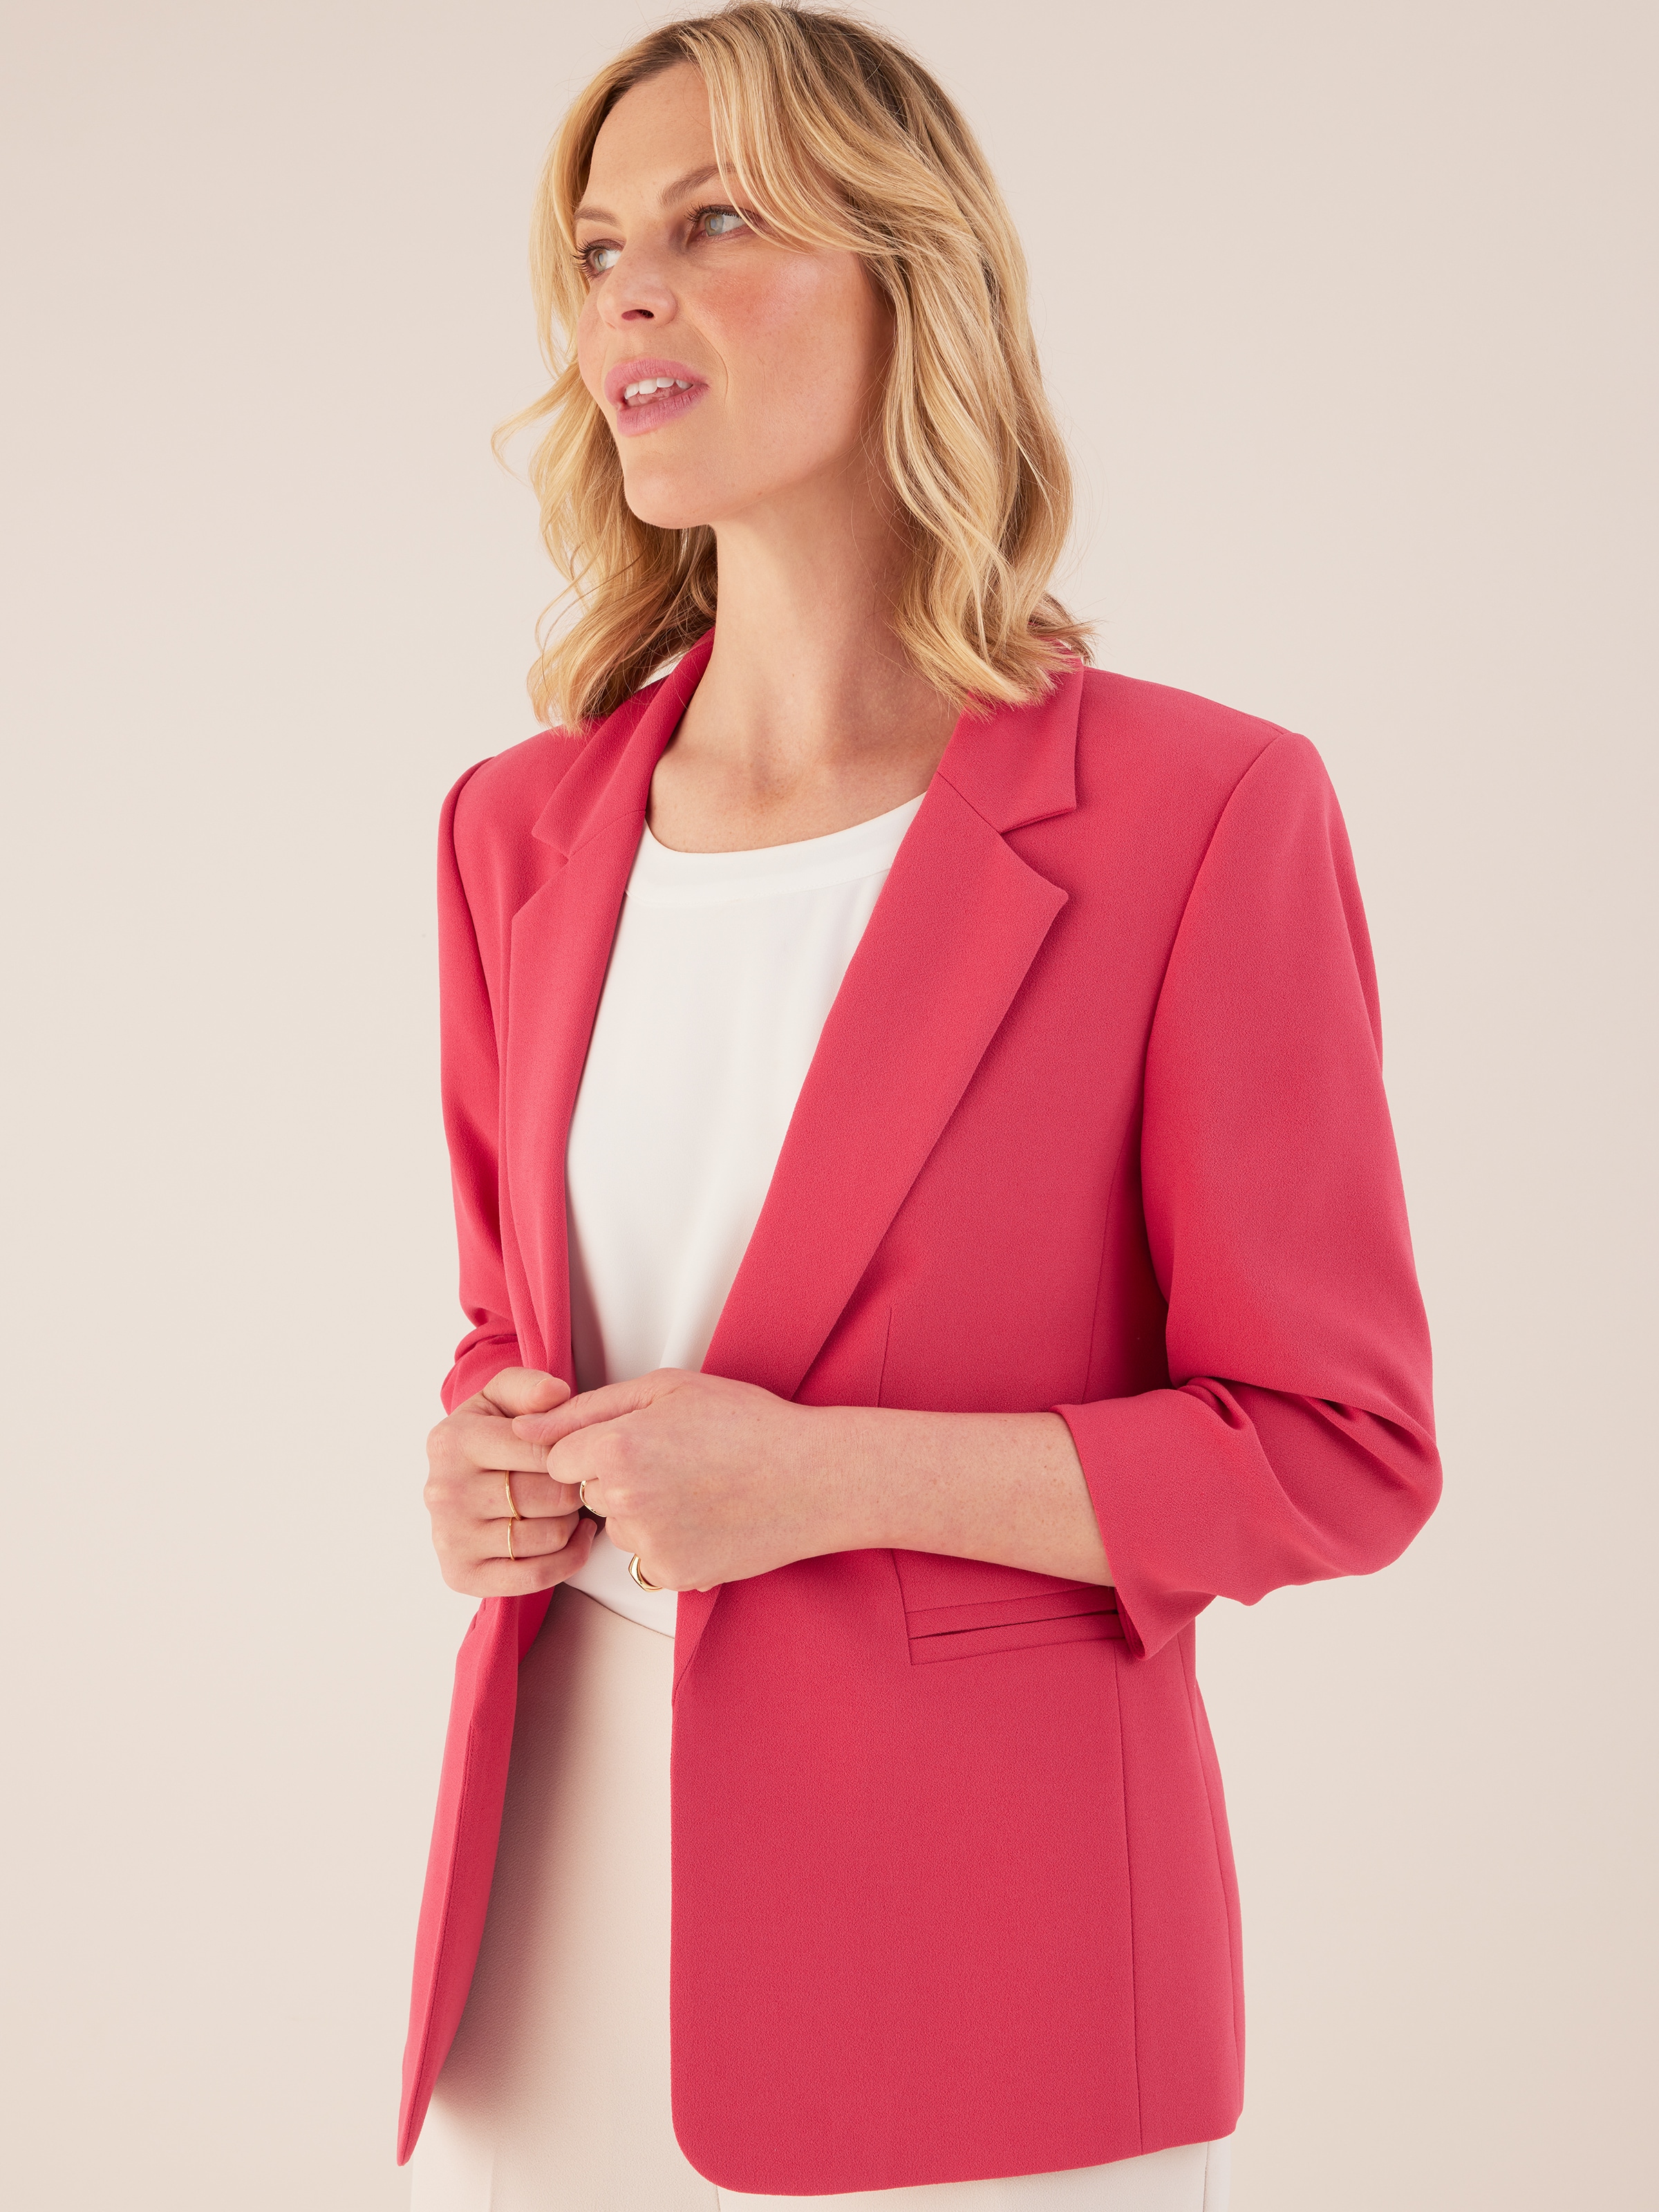 Women's Workwear – Jackets, Suit Jackets & More